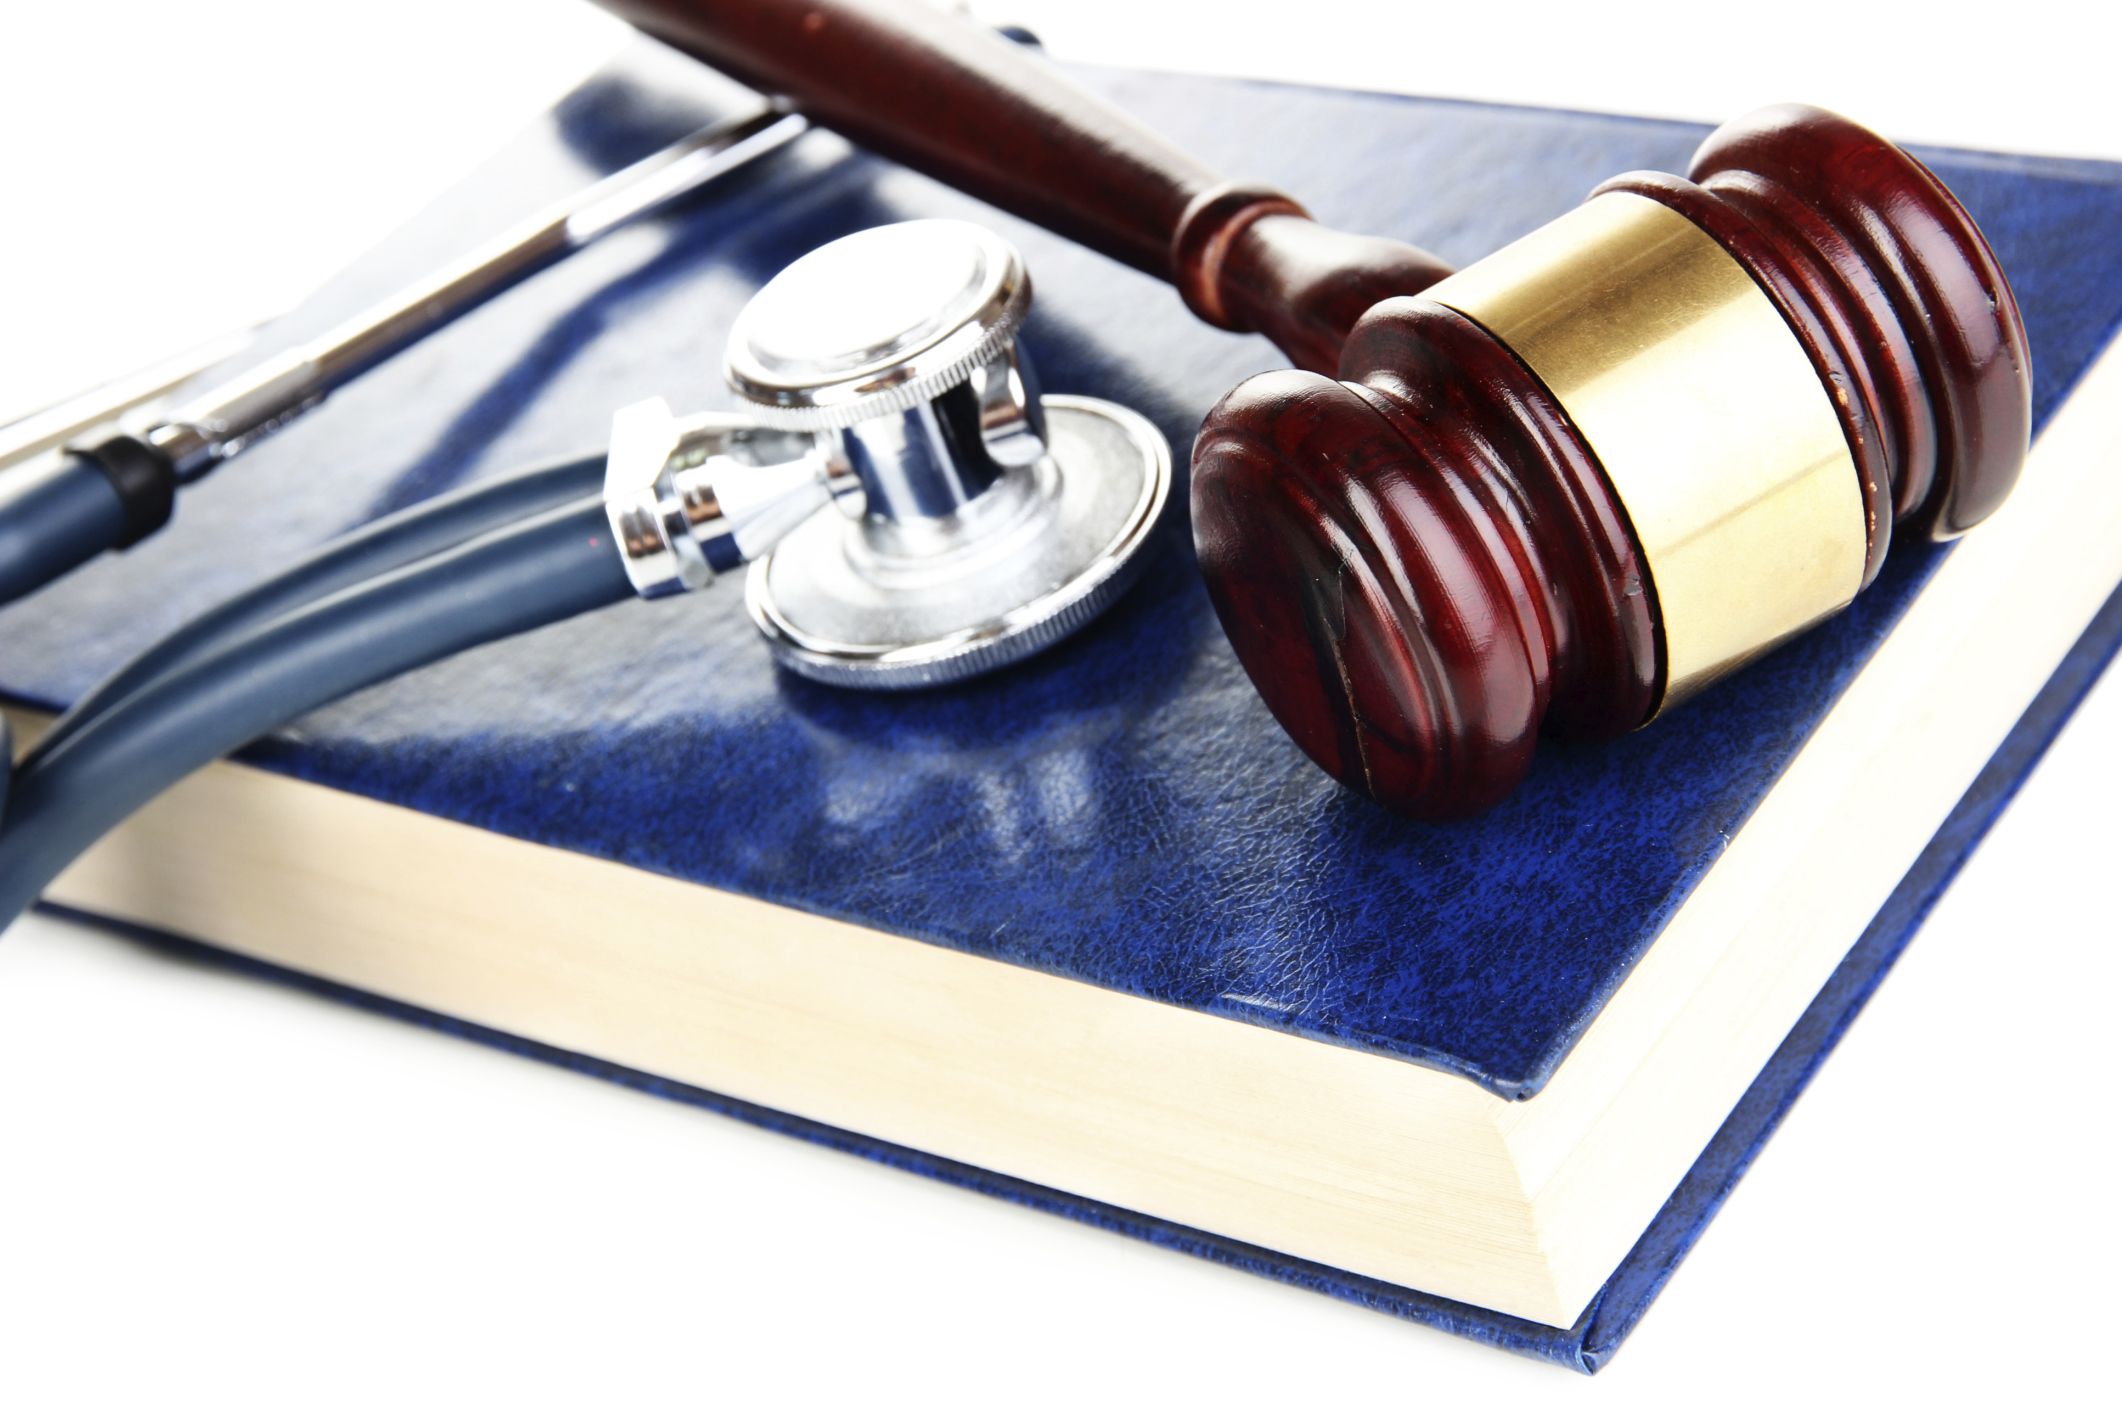 Развитие судебной практики. Медицинское право. Медицина и Юриспруденция. Законодательство в медицине. Защита прав пациентов.